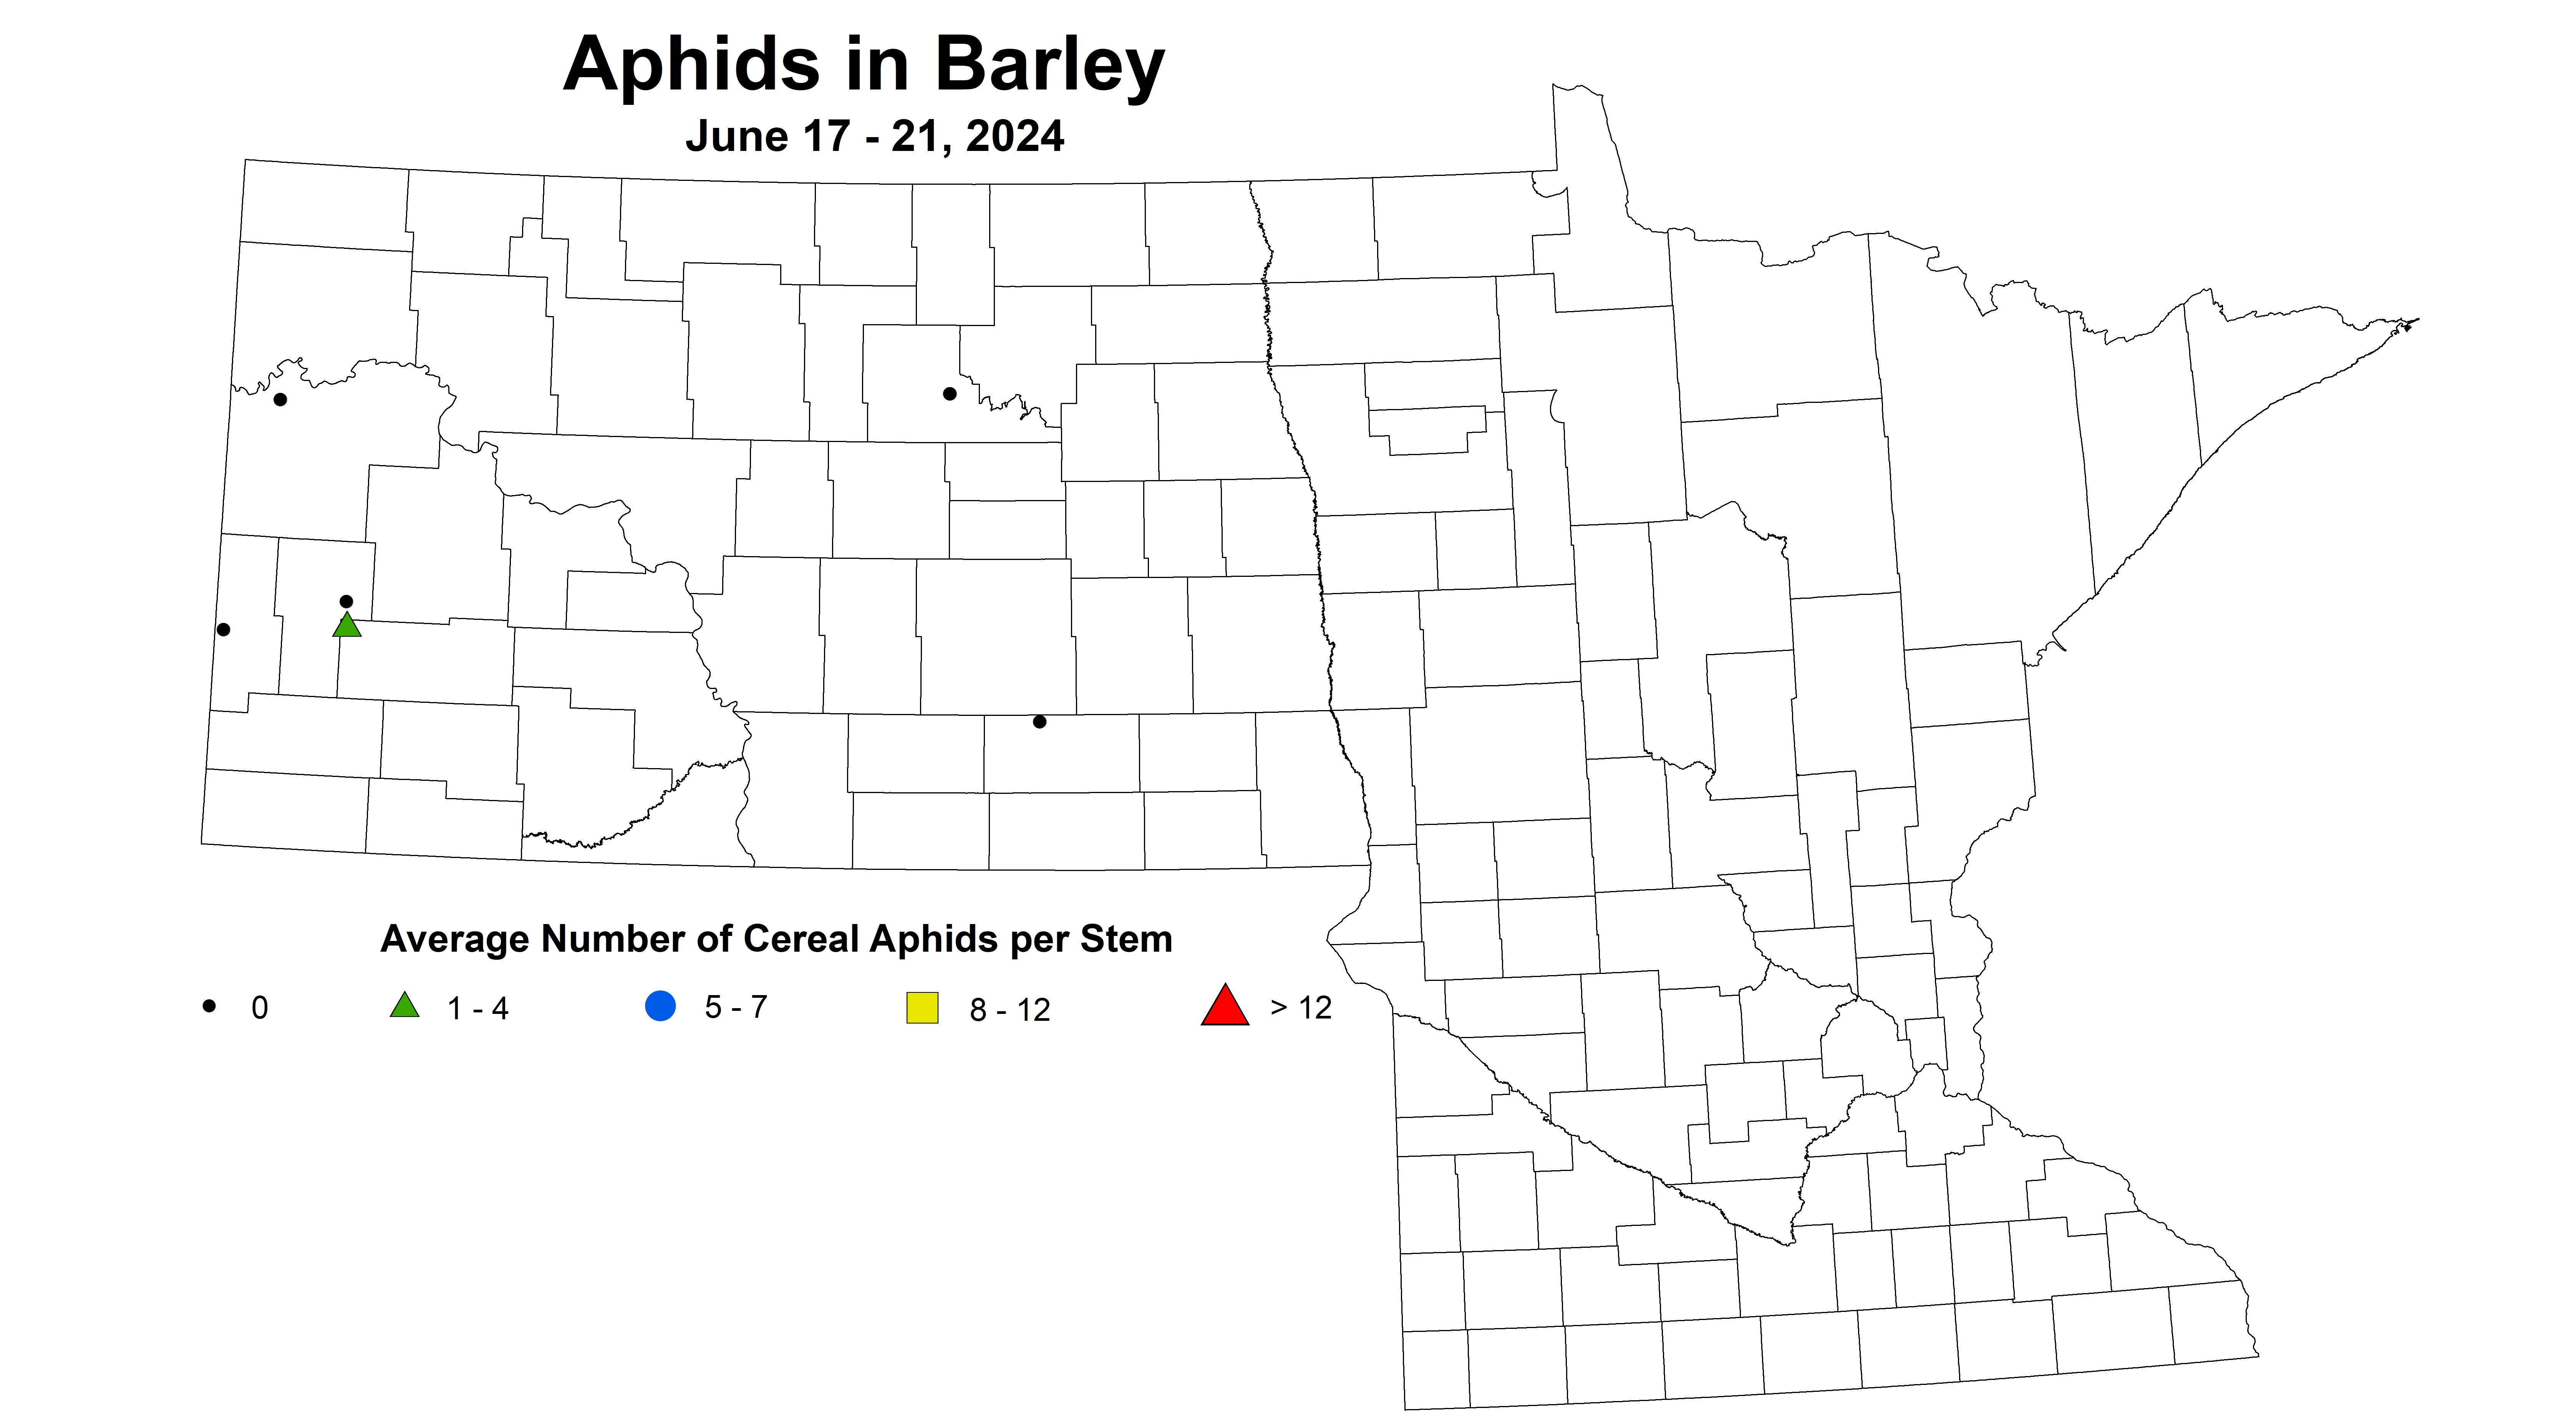 barley aphids June 17-21 2024